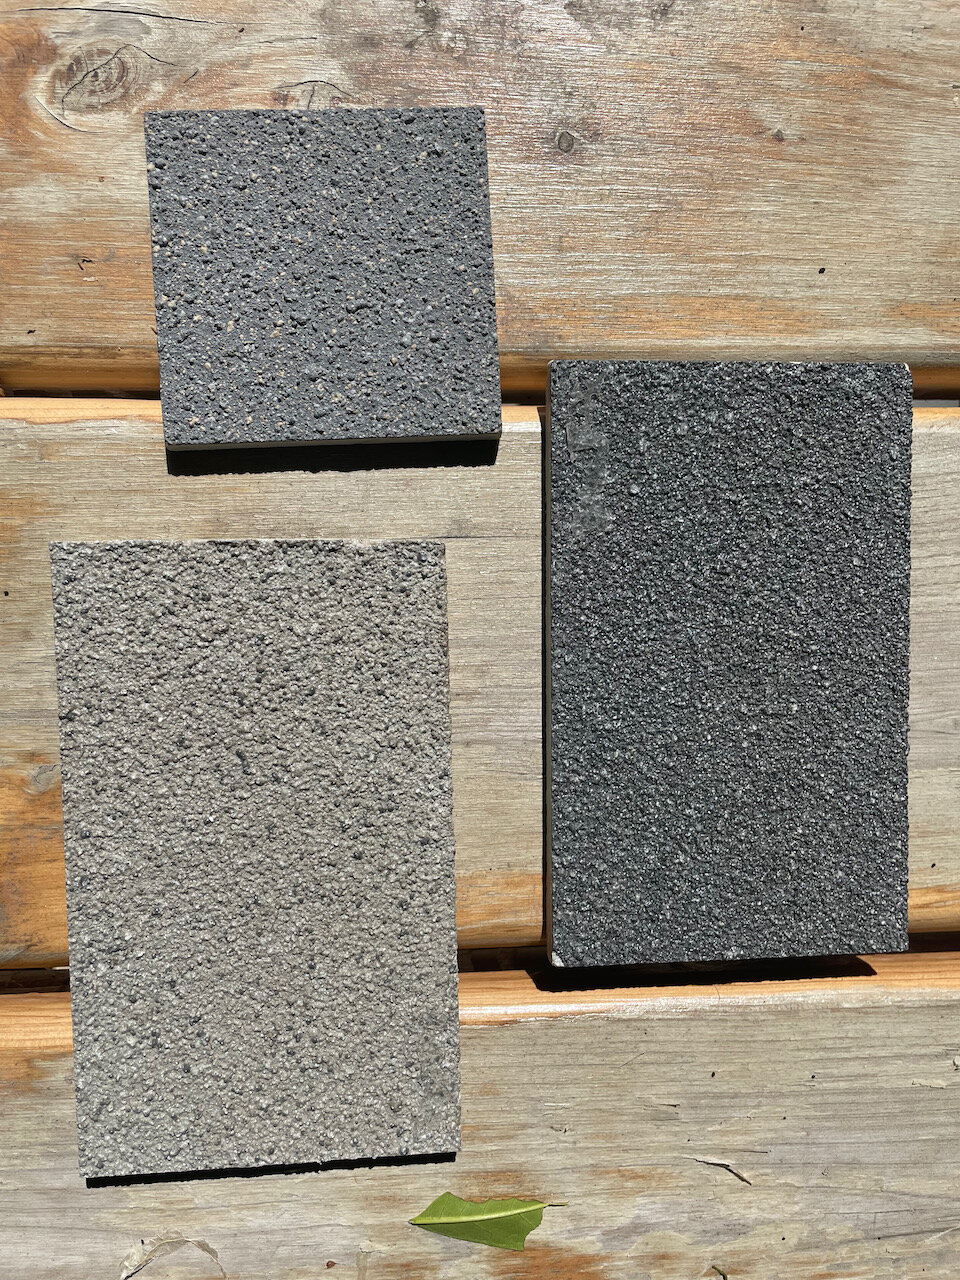 Concrete coating samples